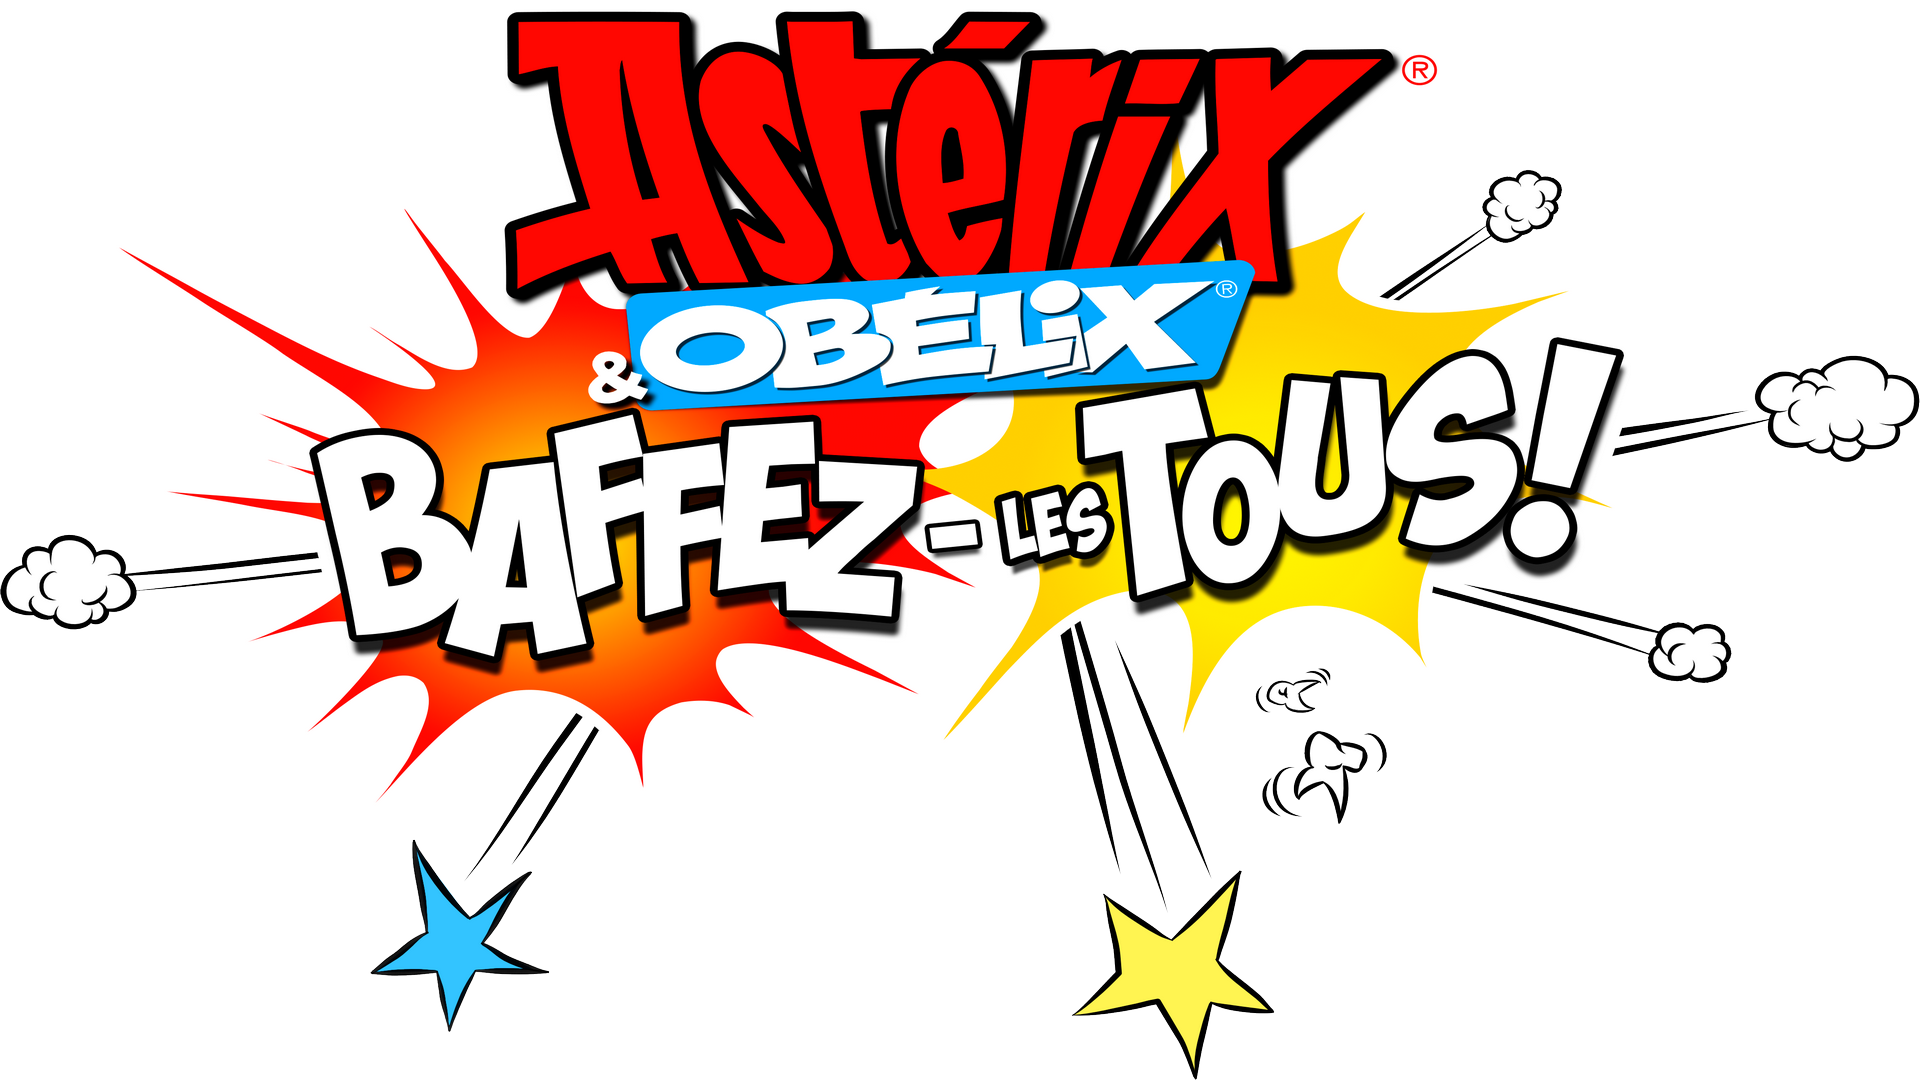 Astérix & Obélix Baffez-les Tous ! logo